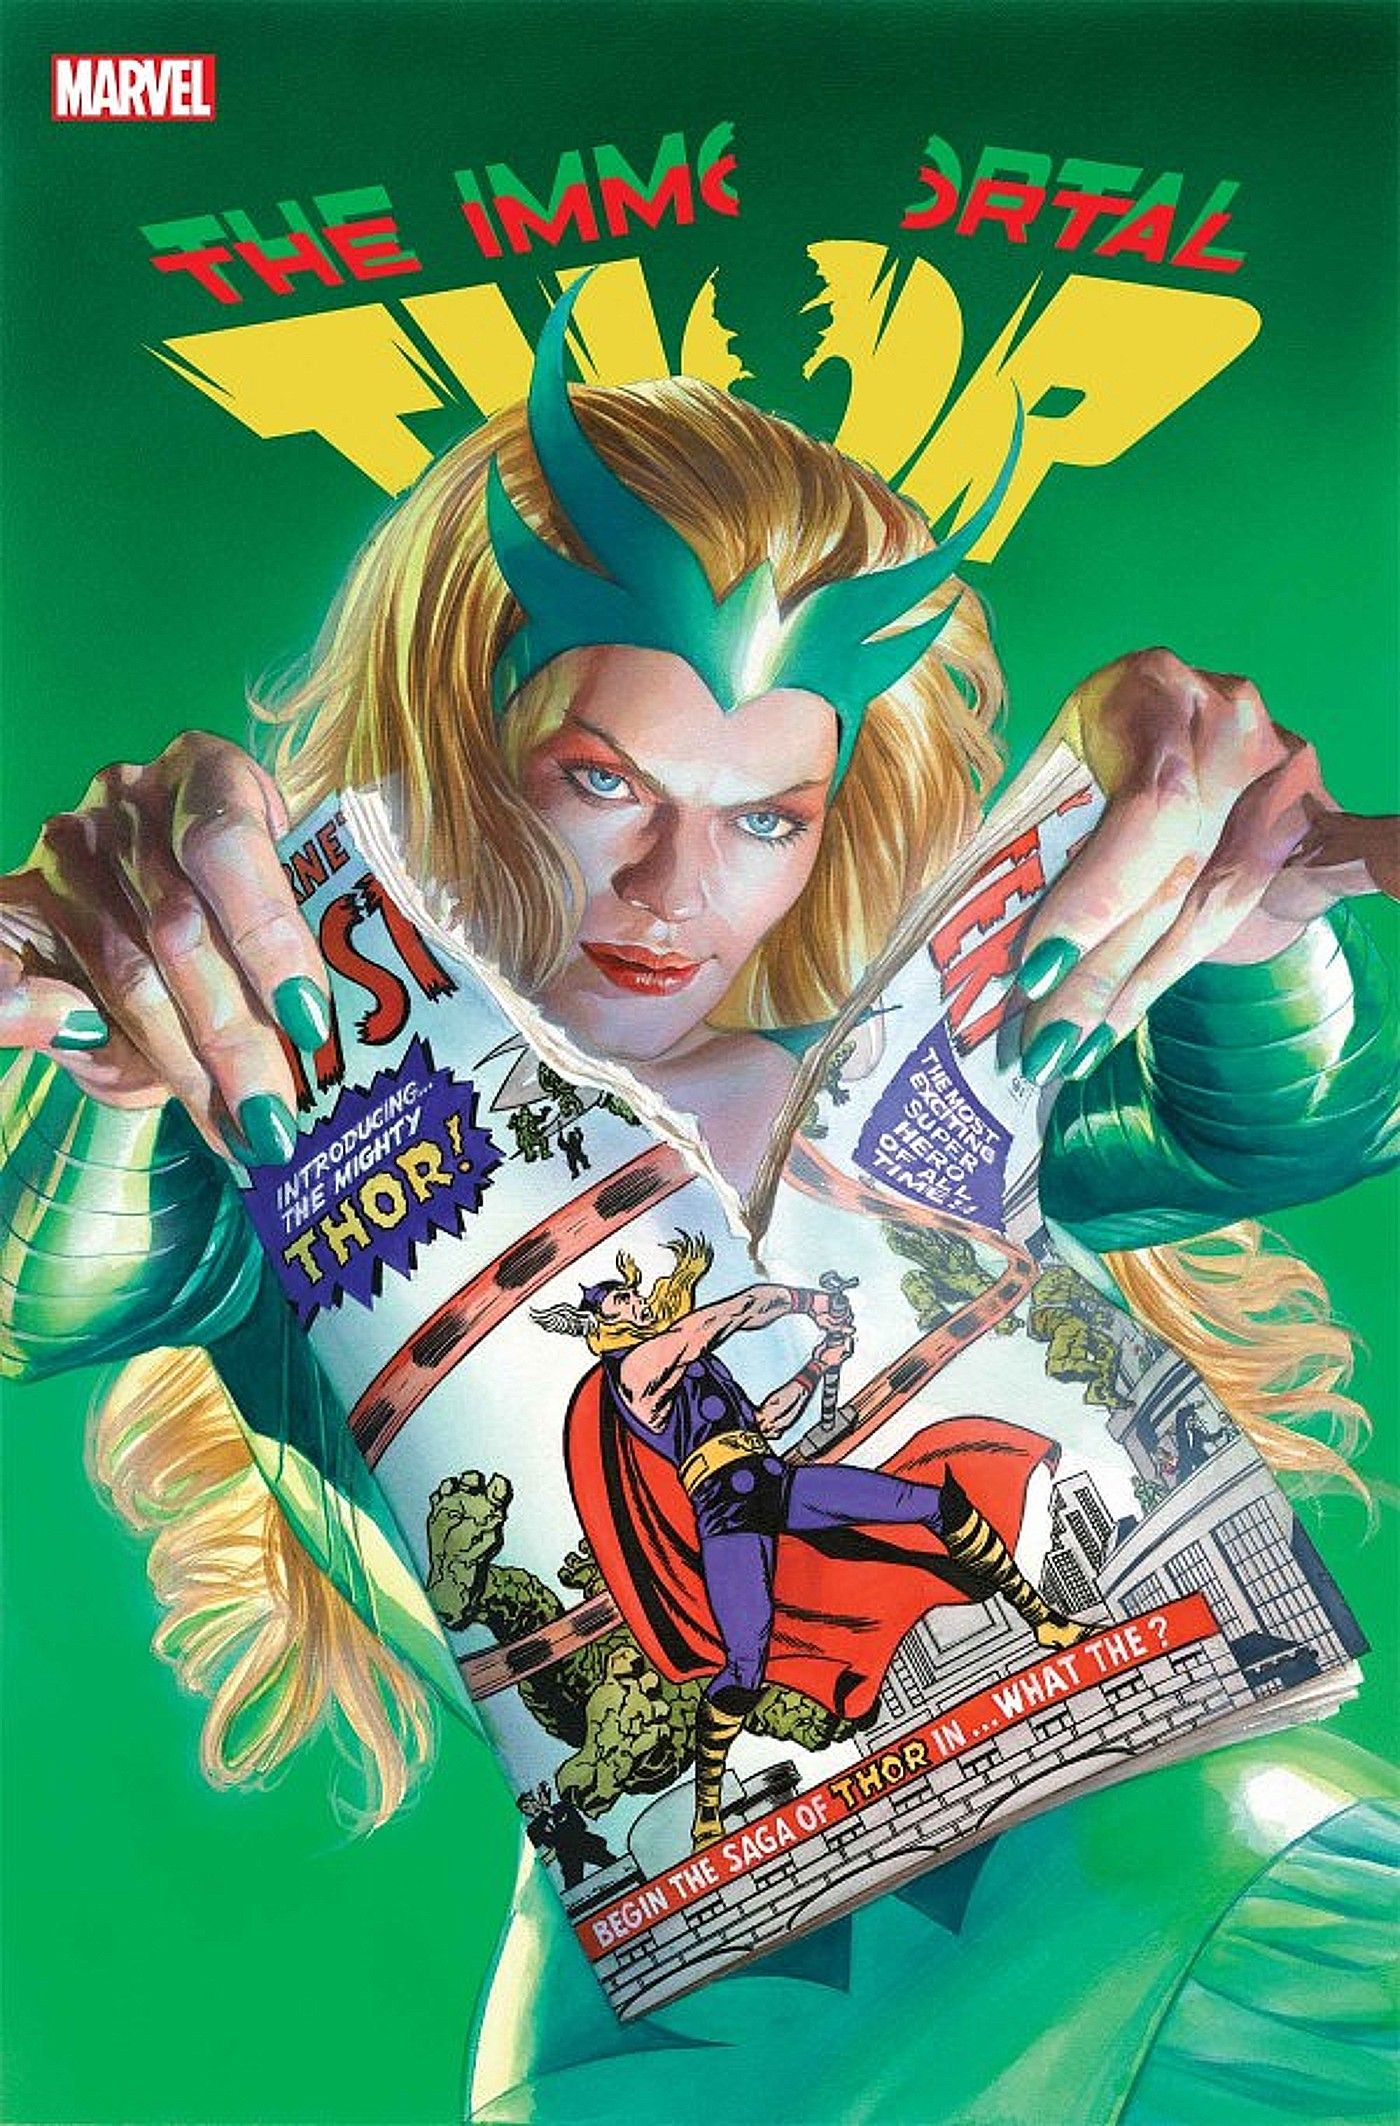 Cover for Immortal Thor #9, villain Enchantress tears a Thor comic in half